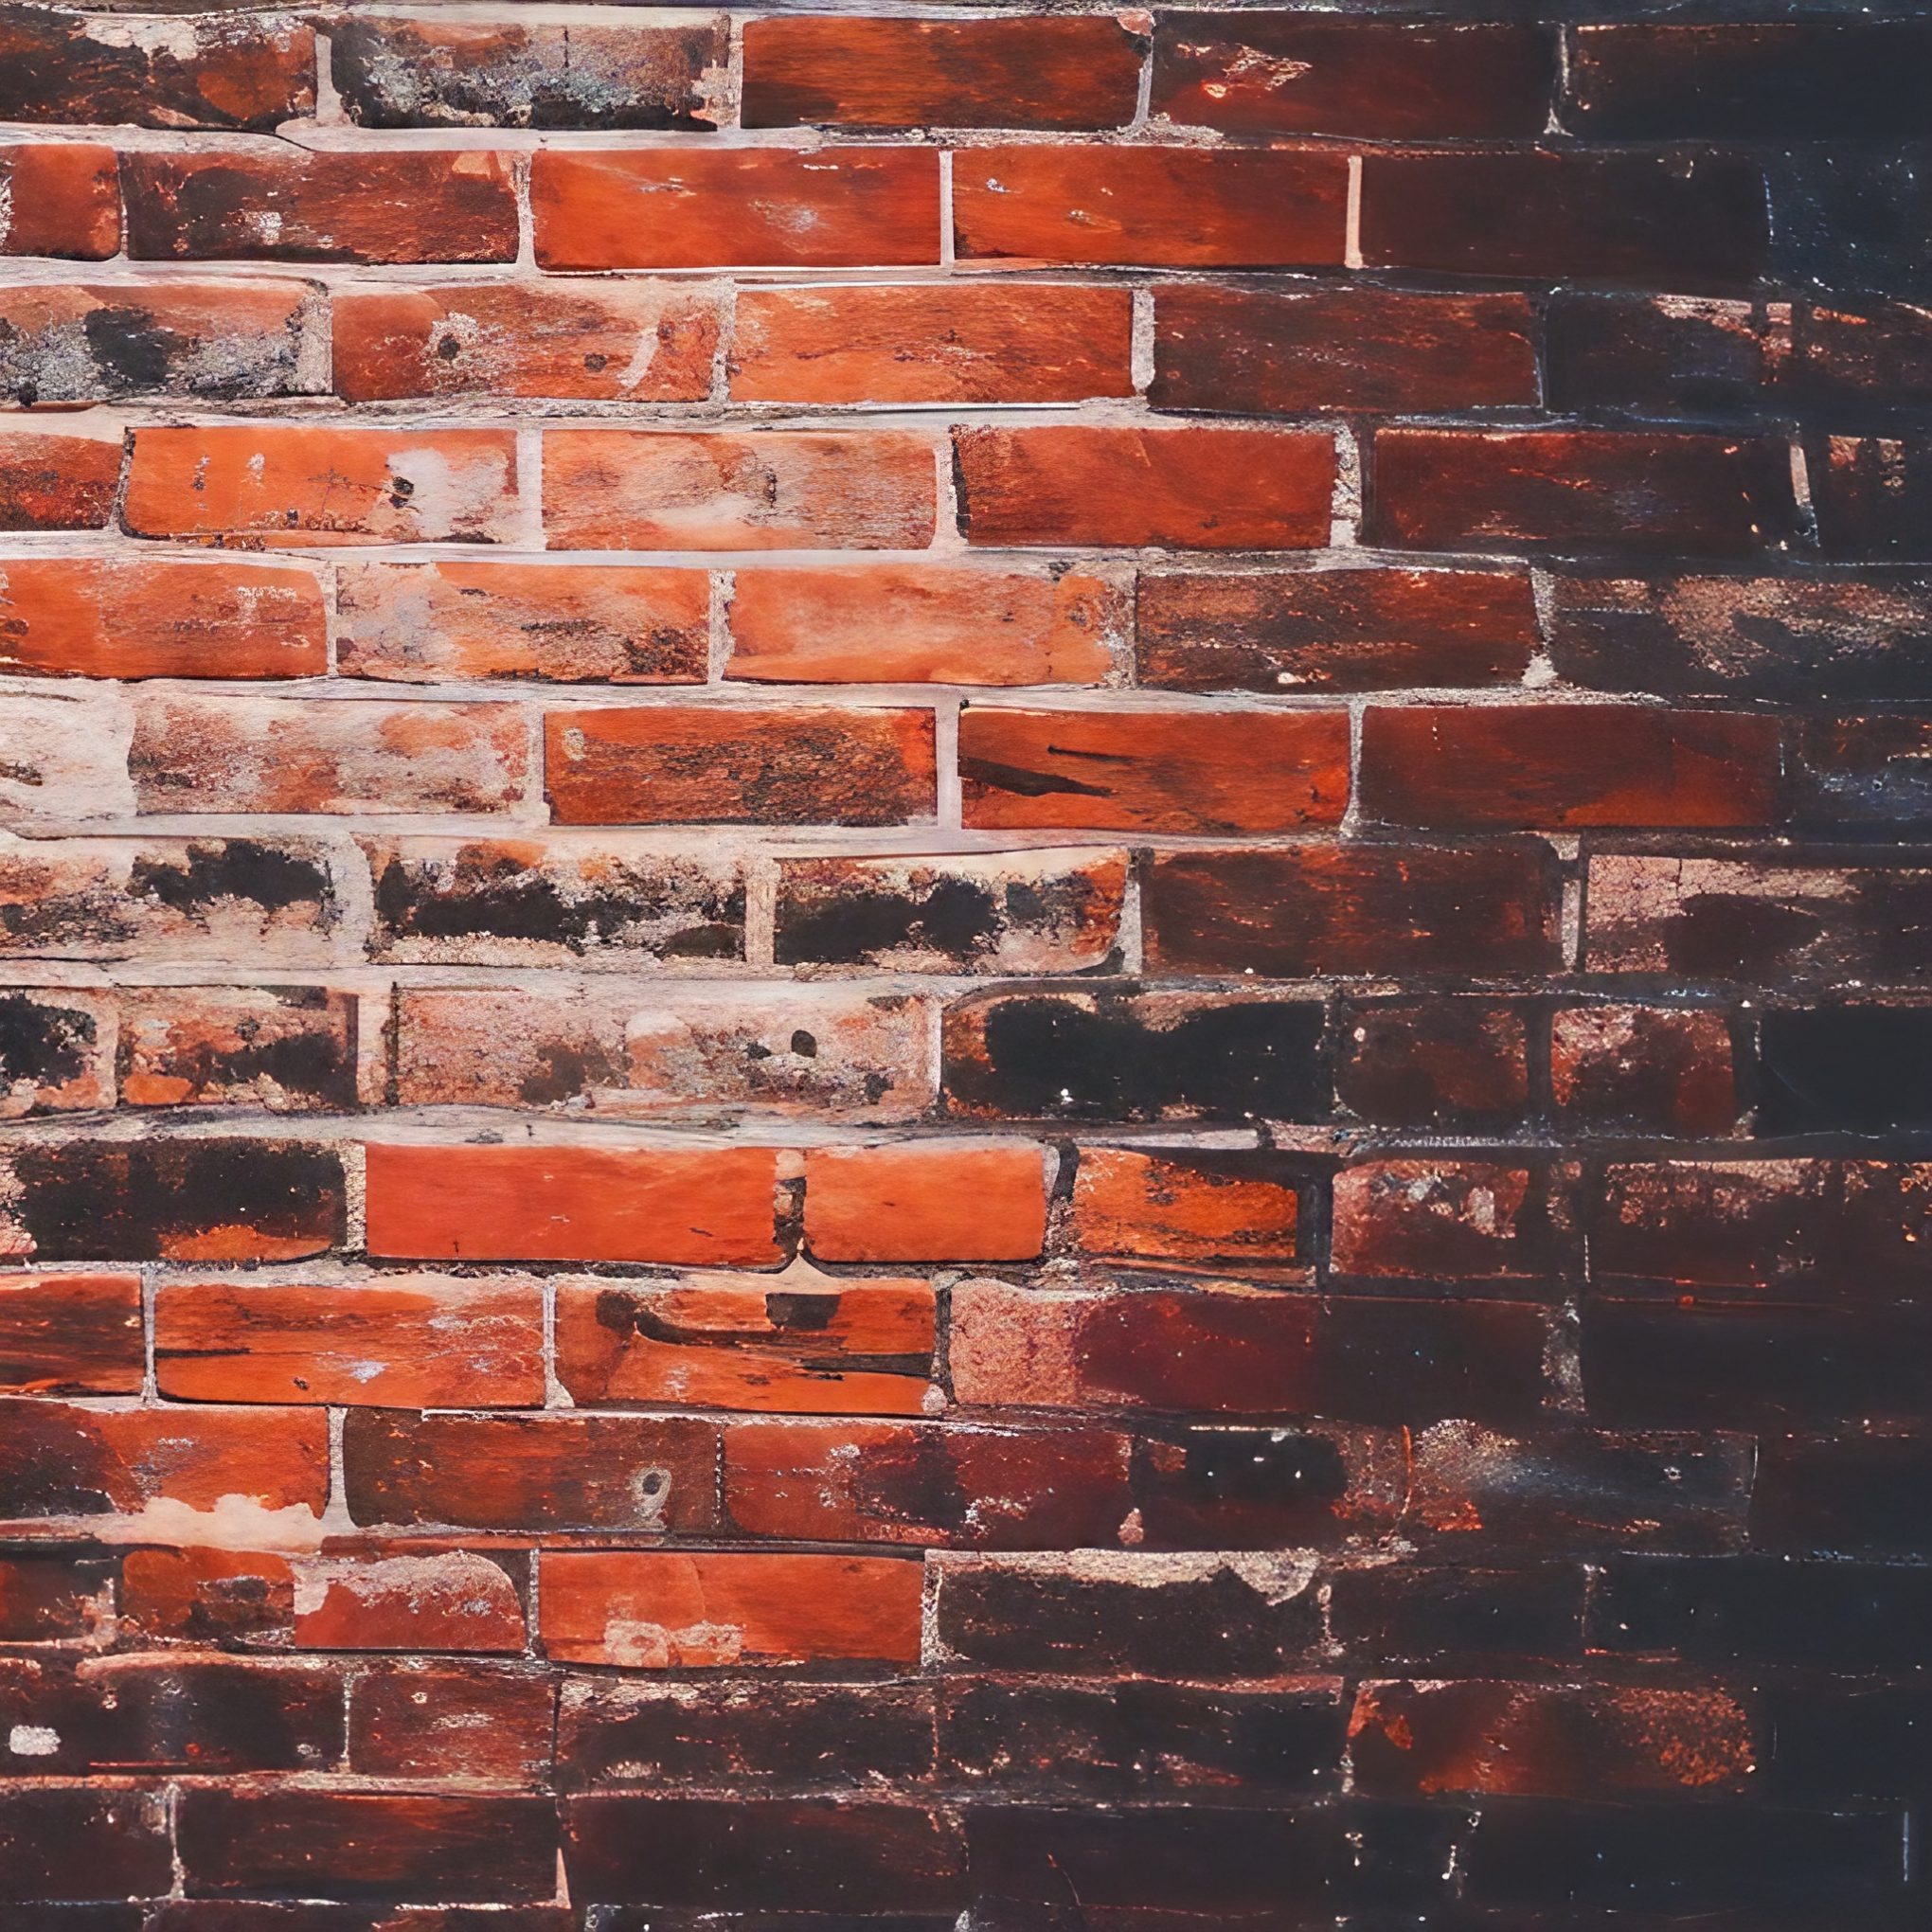 Free Image Download of Grunge Red Brick Wall